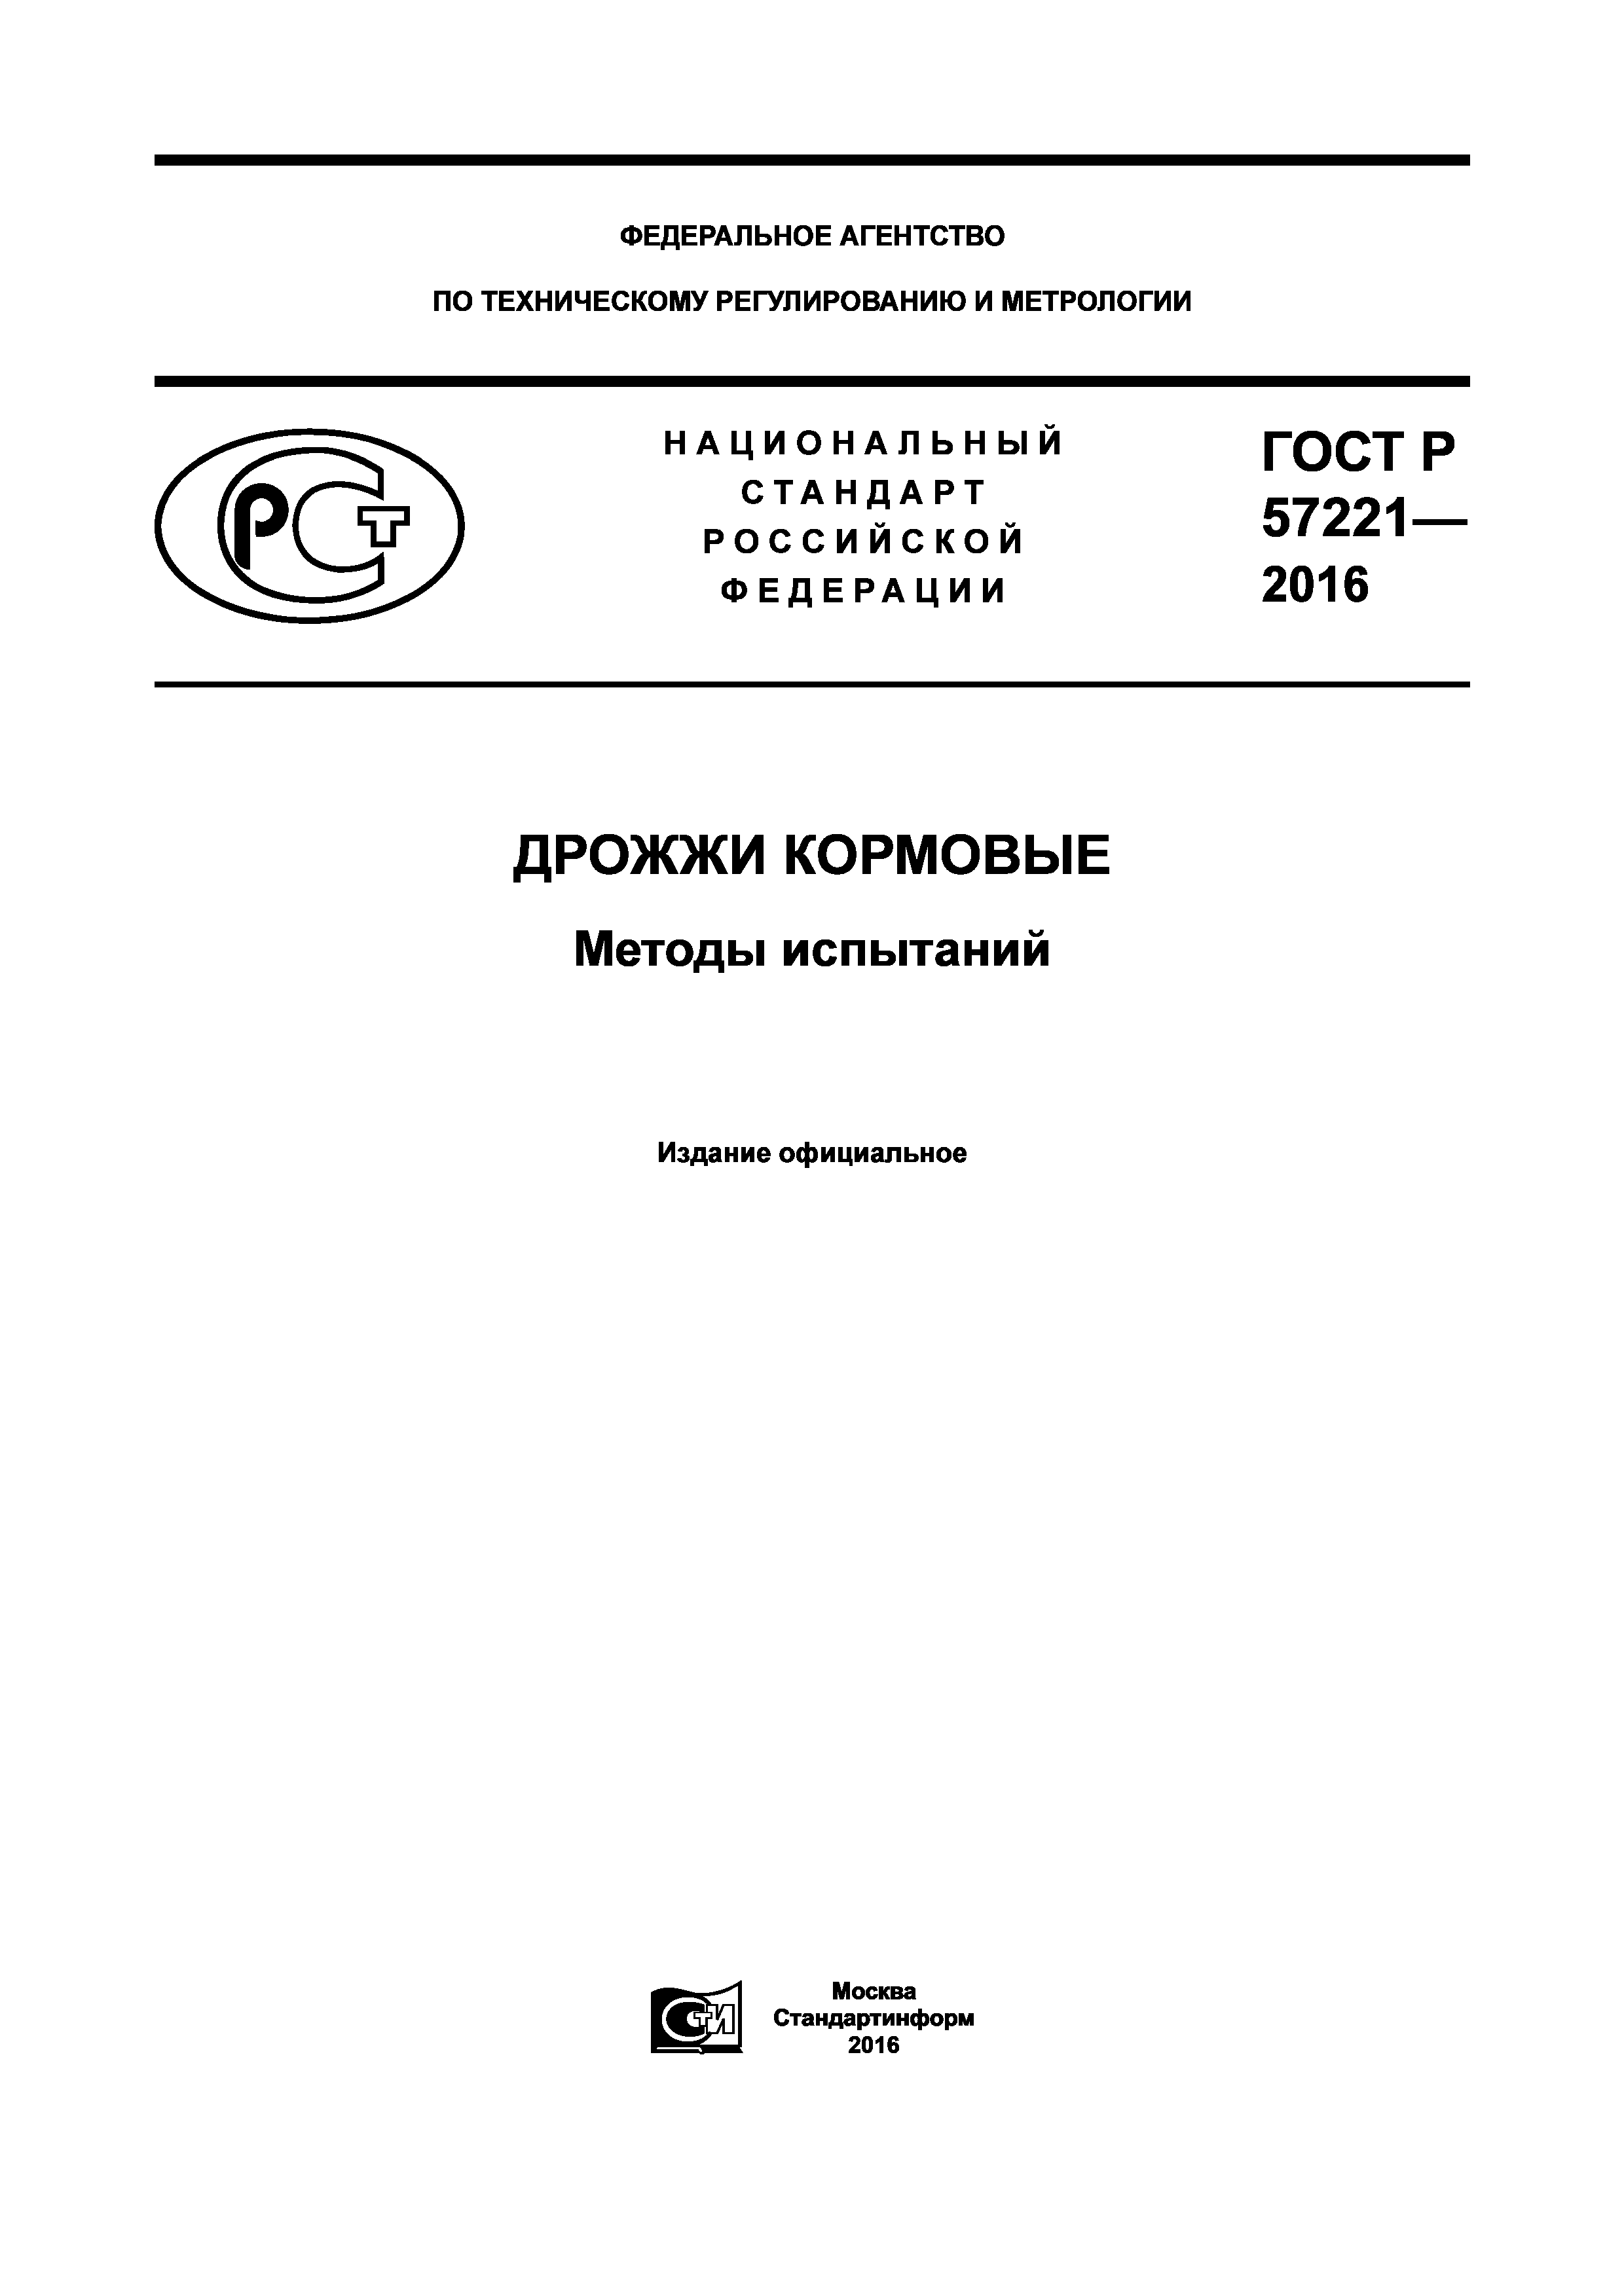 ГОСТ Р 57221-2016